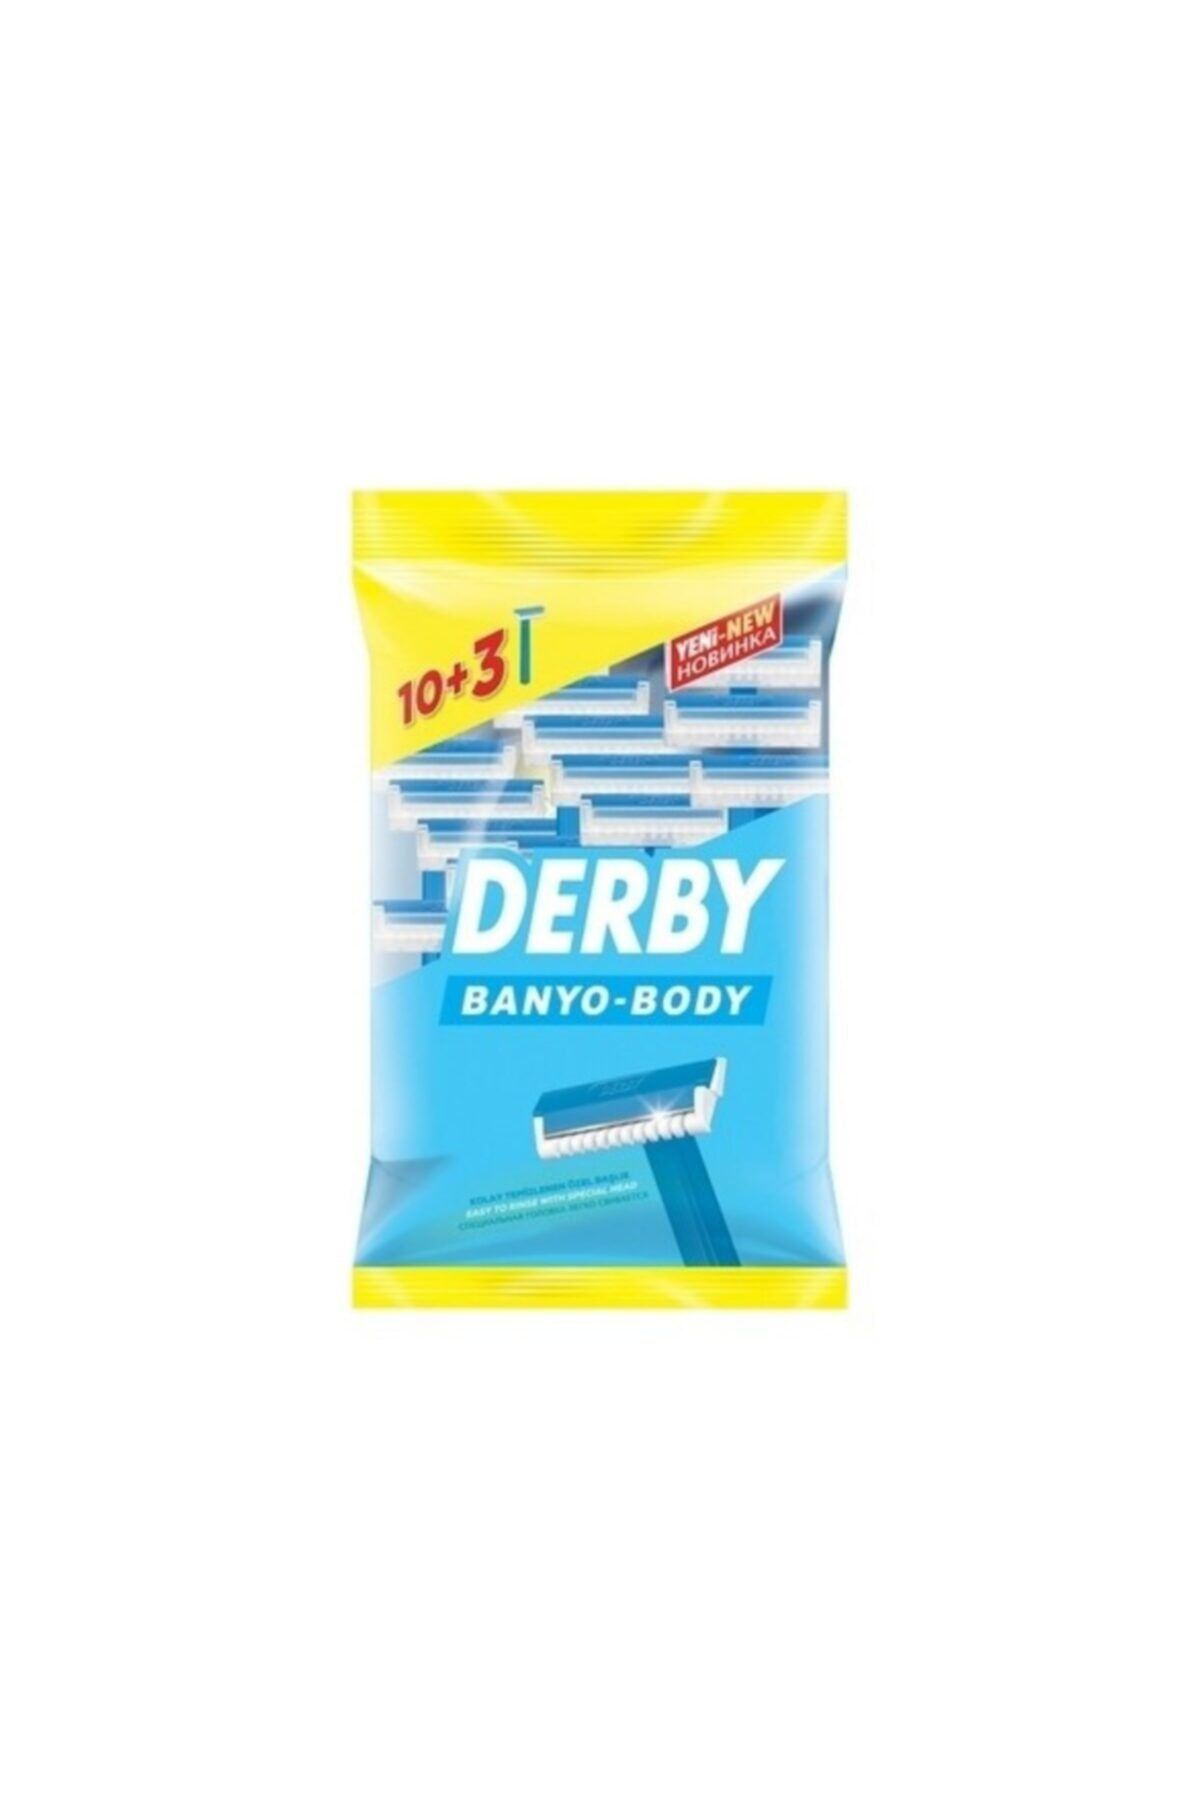 Derby Banyo Body Traş Bıçağı 10+3